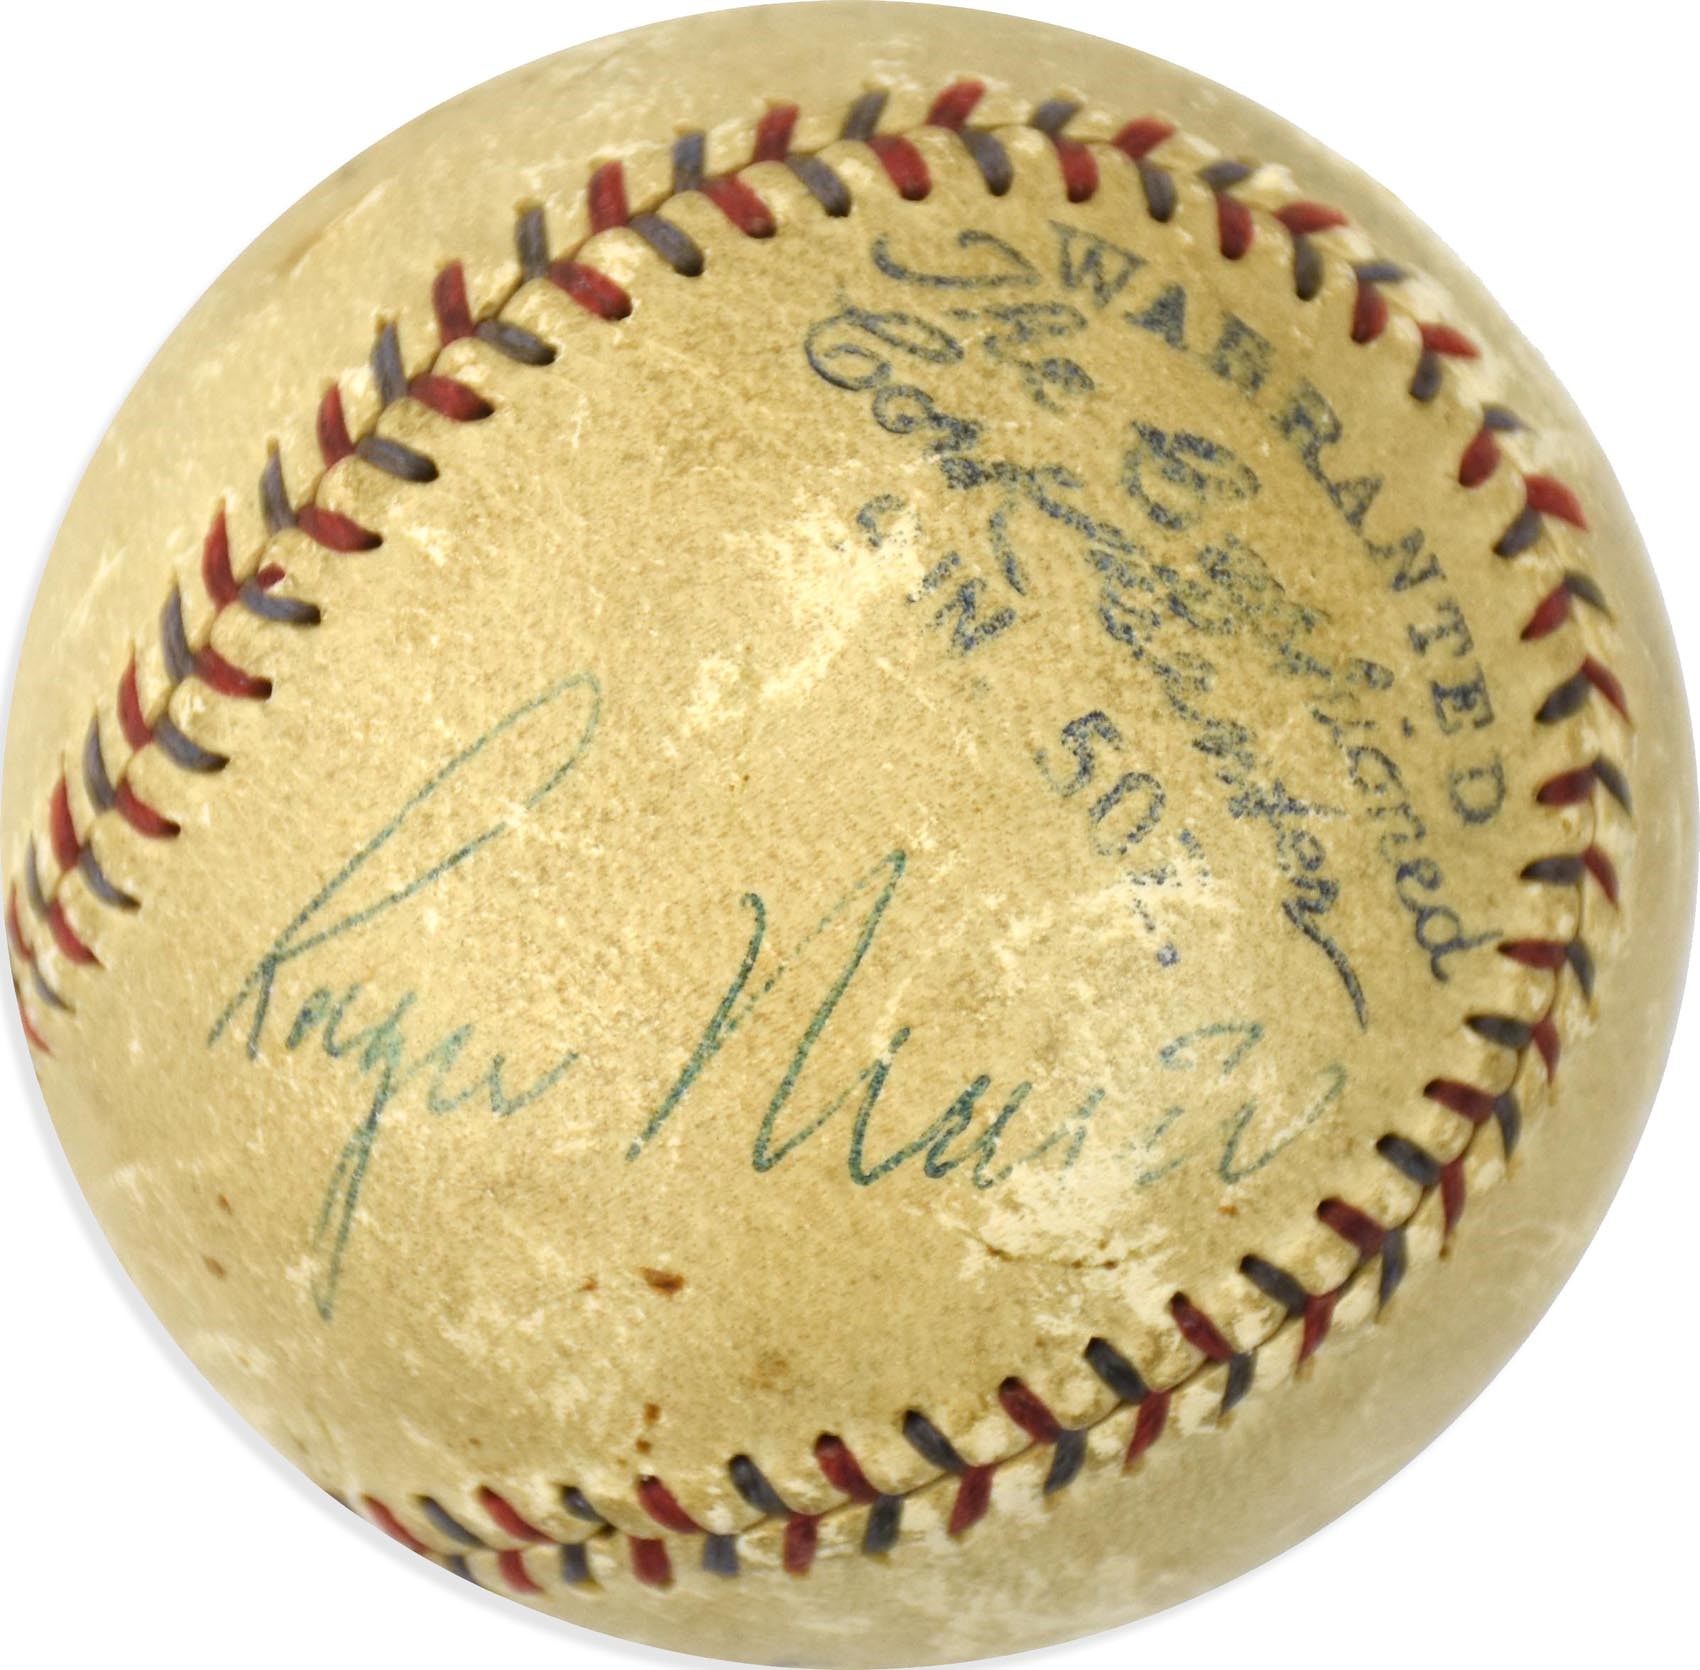 Mantle and Maris - Circa 1961 Roger Maris Signed OAL Reach Baseball